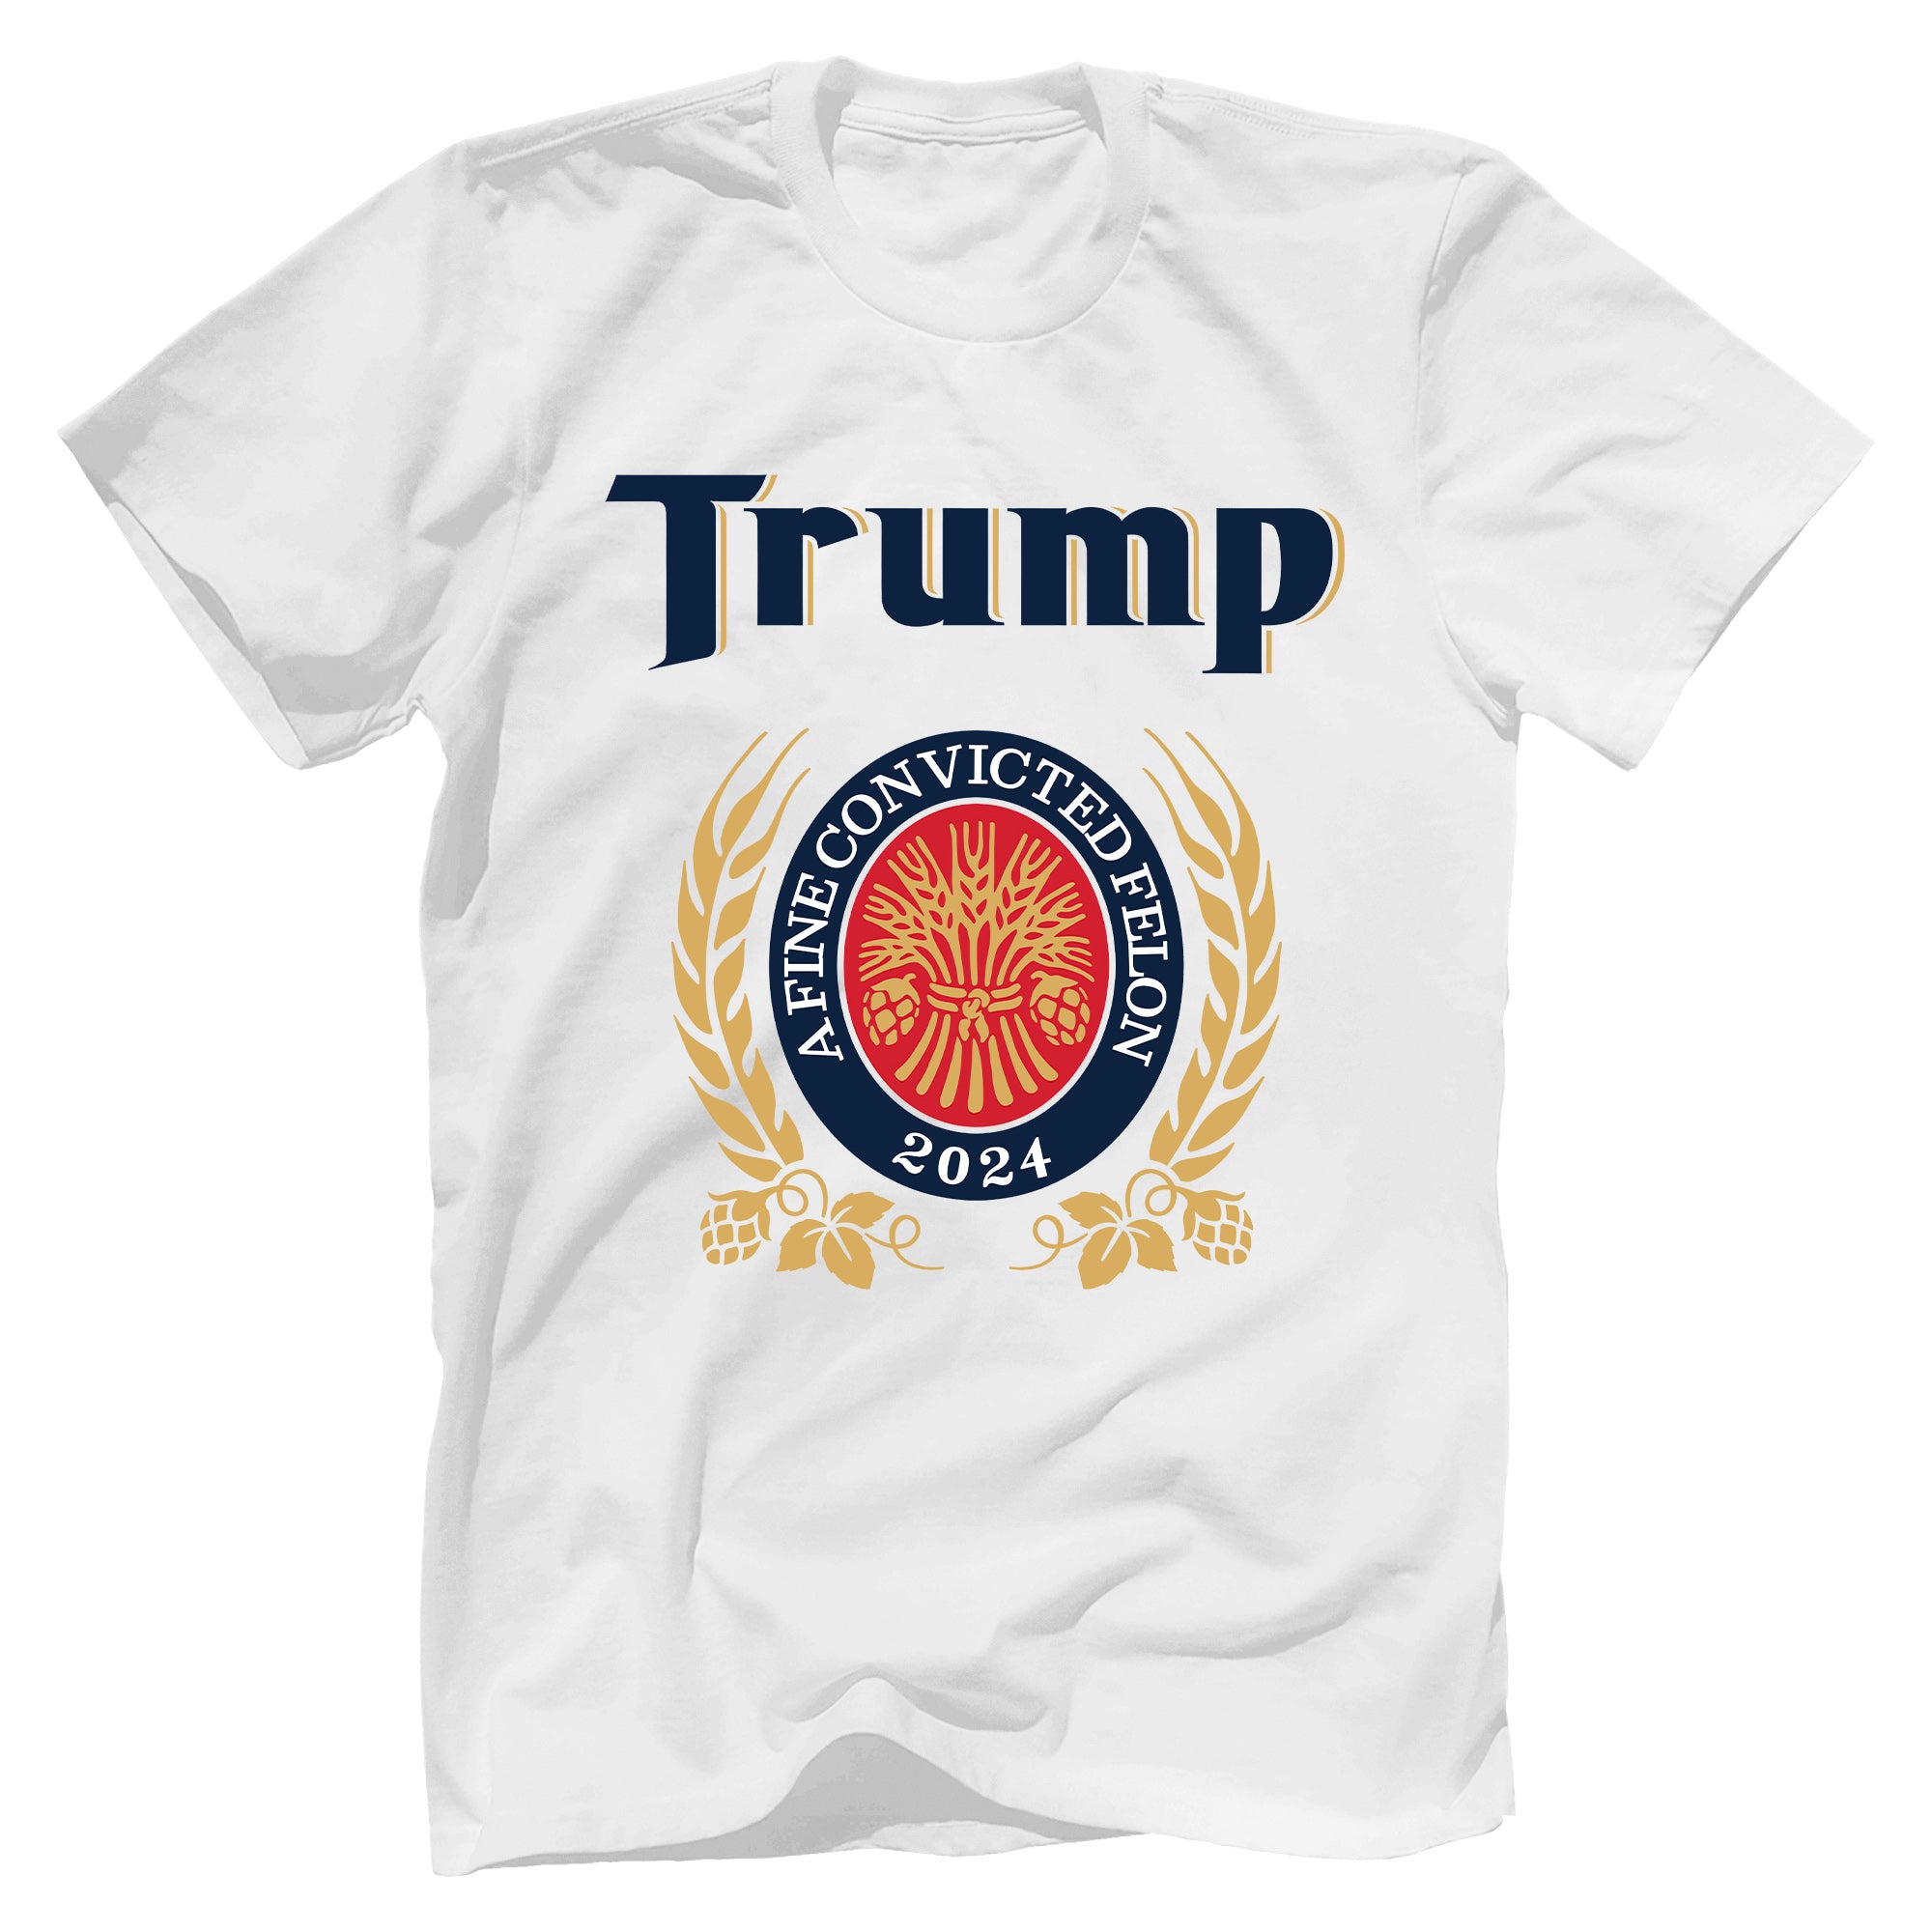 Trump, A Fine Convicted Felon T-Shirt - GB82